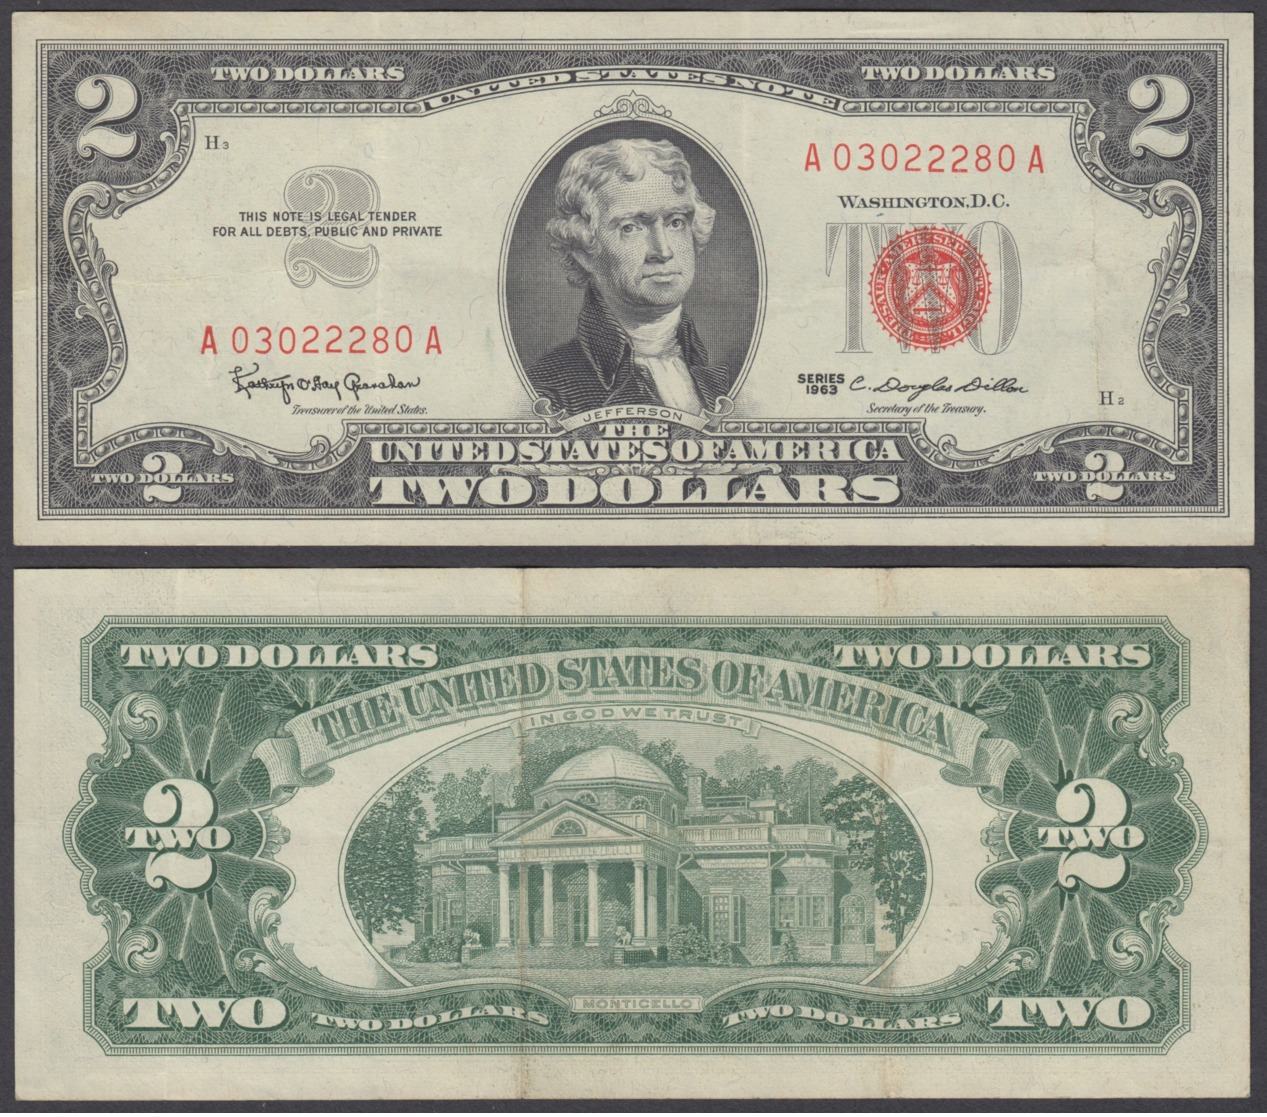 USA 2 Dollars 1963 Red Seal (VF+) Condition Banknote - Biljetten Van De Verenigde Staten (1928-1953)